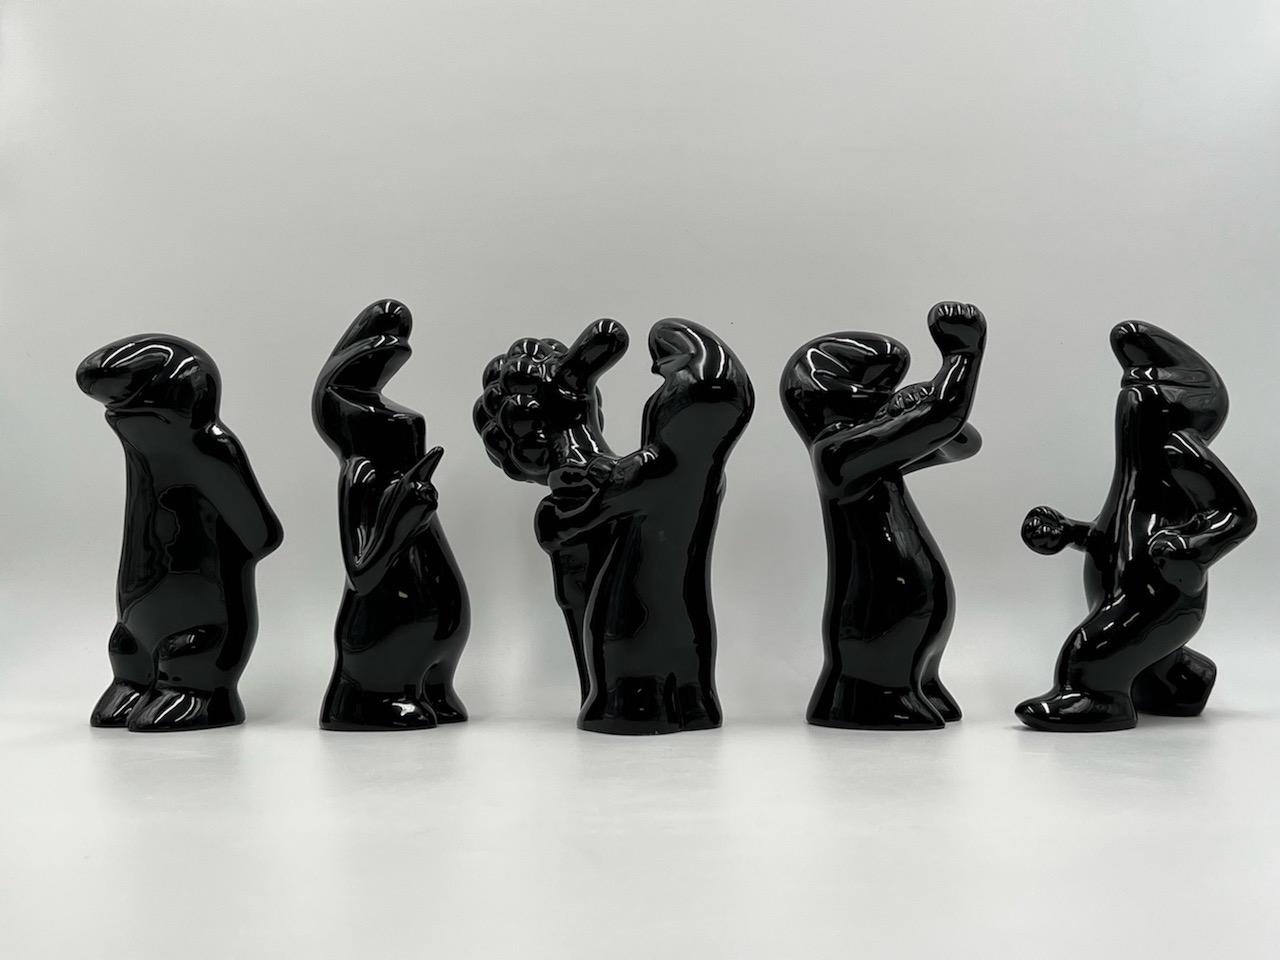 Iconic Ceramic Sculpture 'La Linea' Cavandoli - 'Brooding' Figurine, 1960s For Sale 3